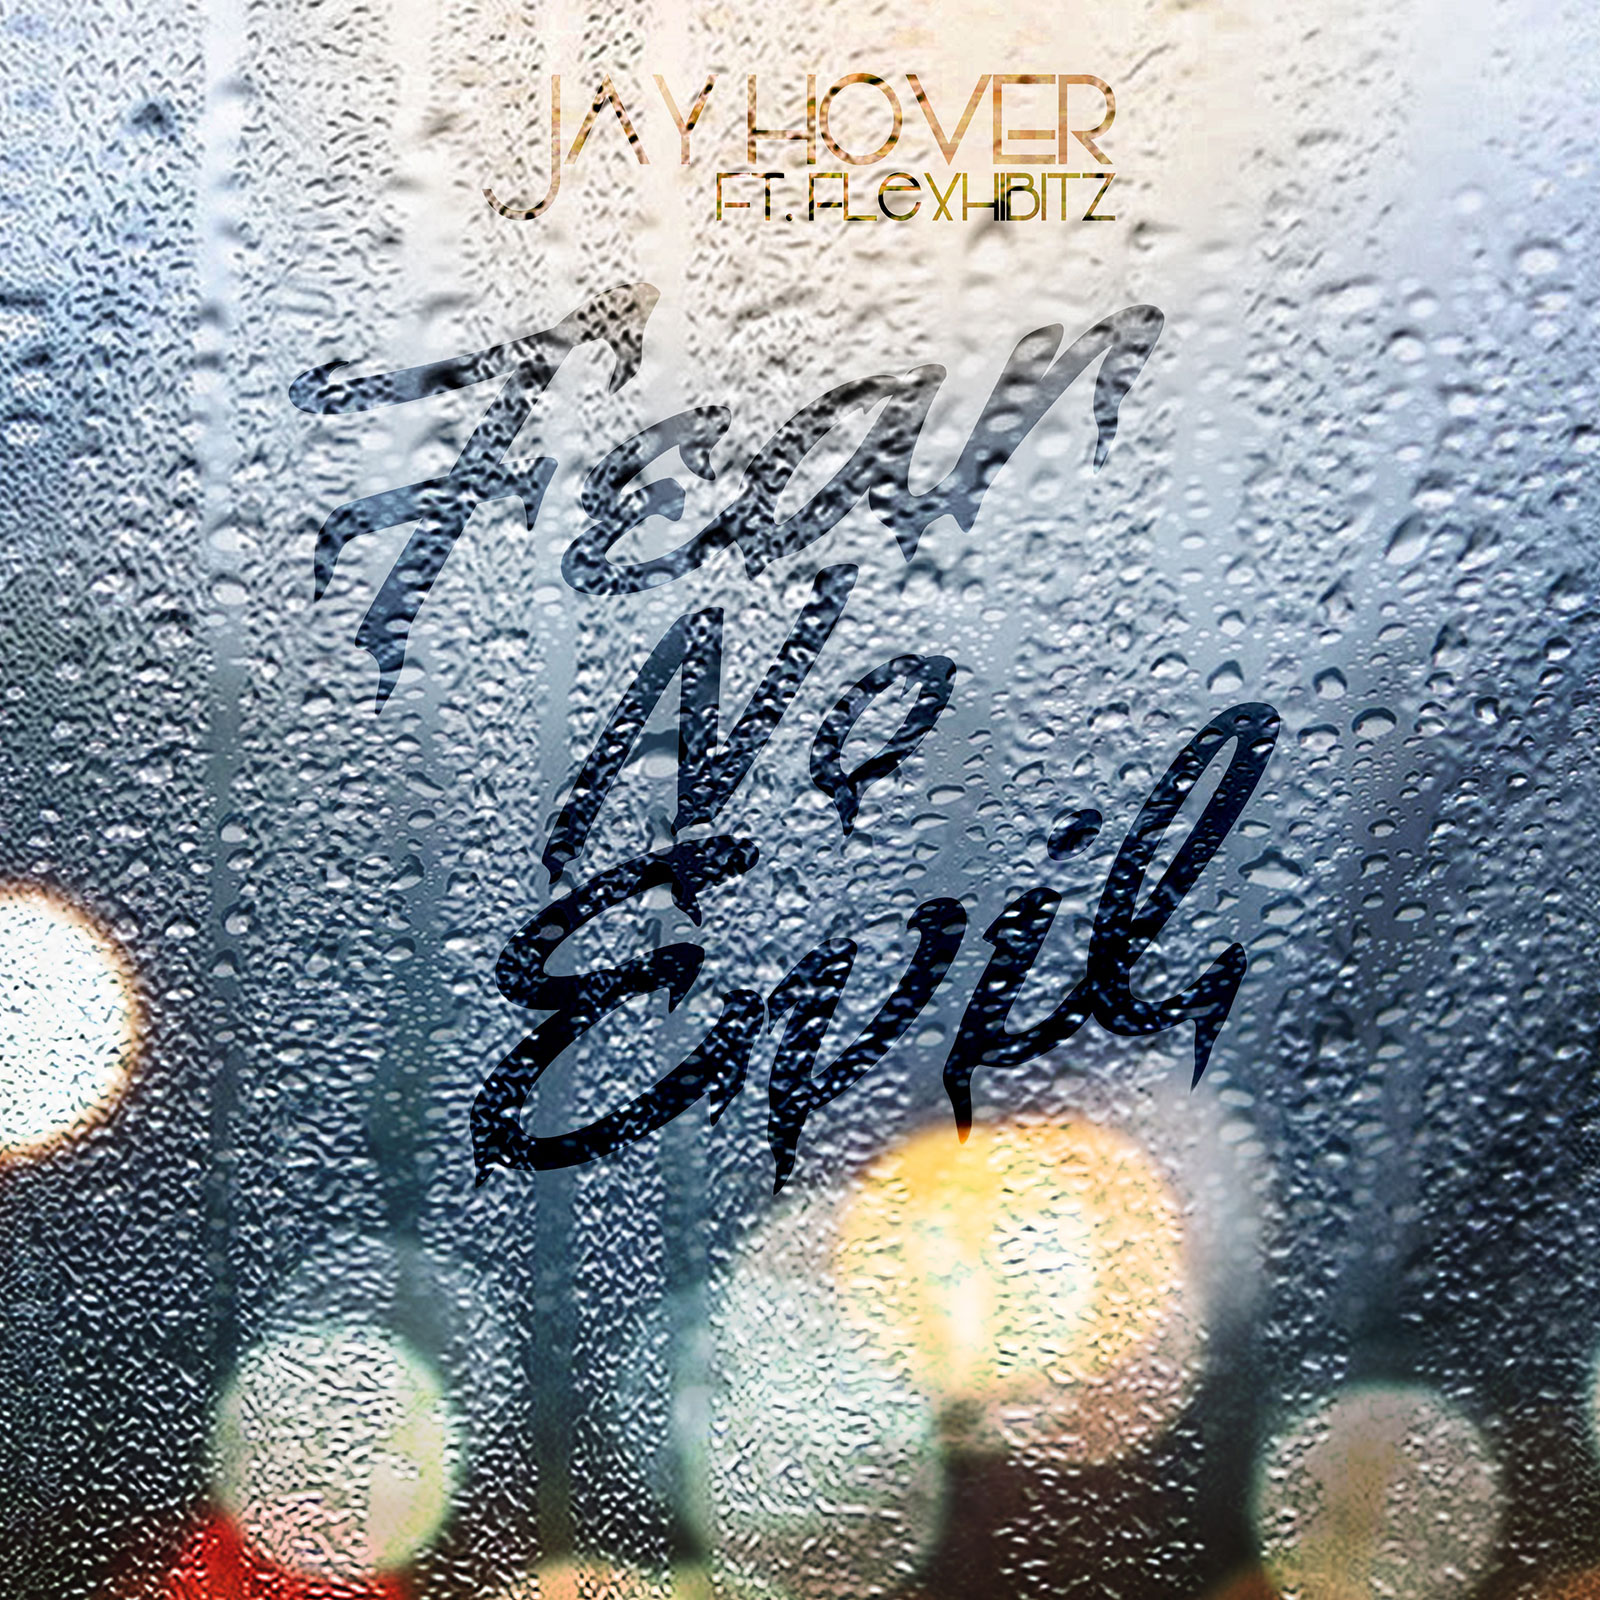 Fear No Evil by Jay Hover feat. Flexhbitz